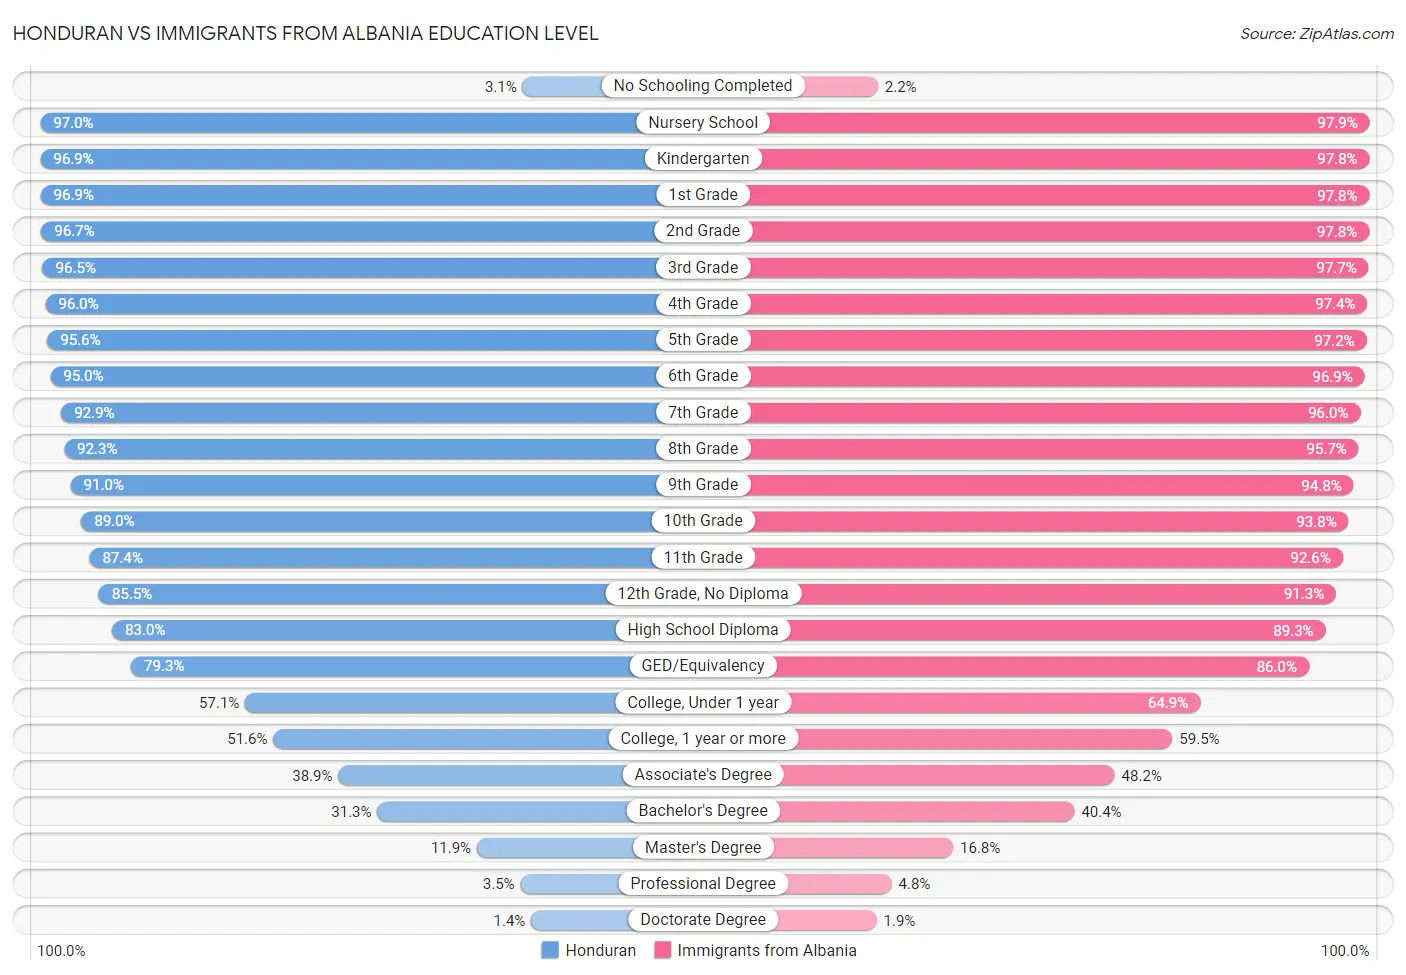 Honduran vs Immigrants from Albania Education Level